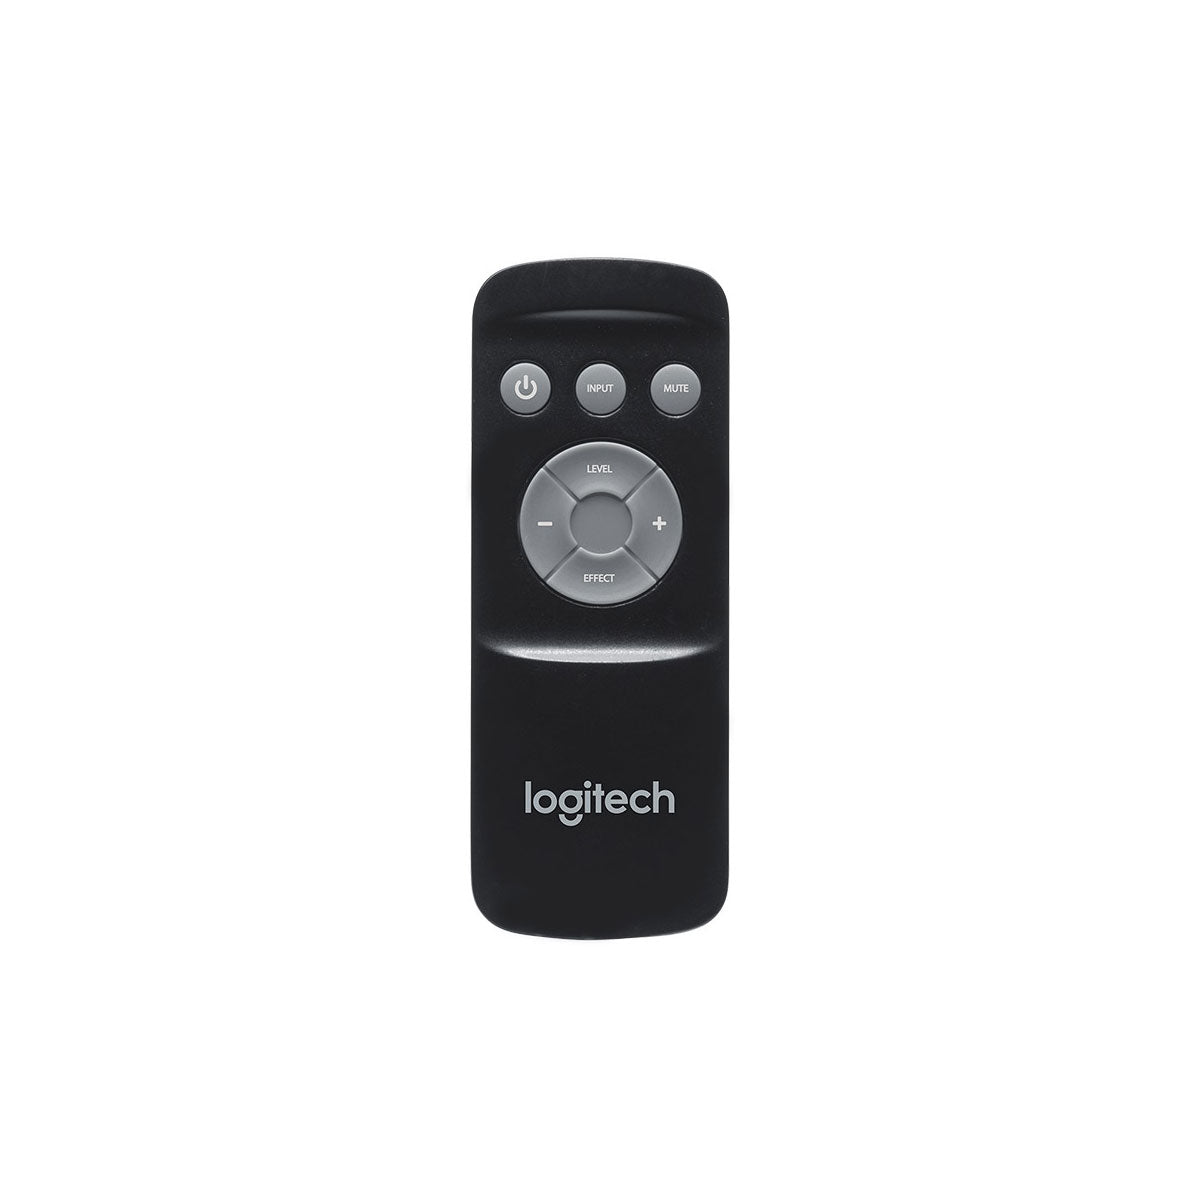 Logitech Z906 Speaker System – Ghostly Engines